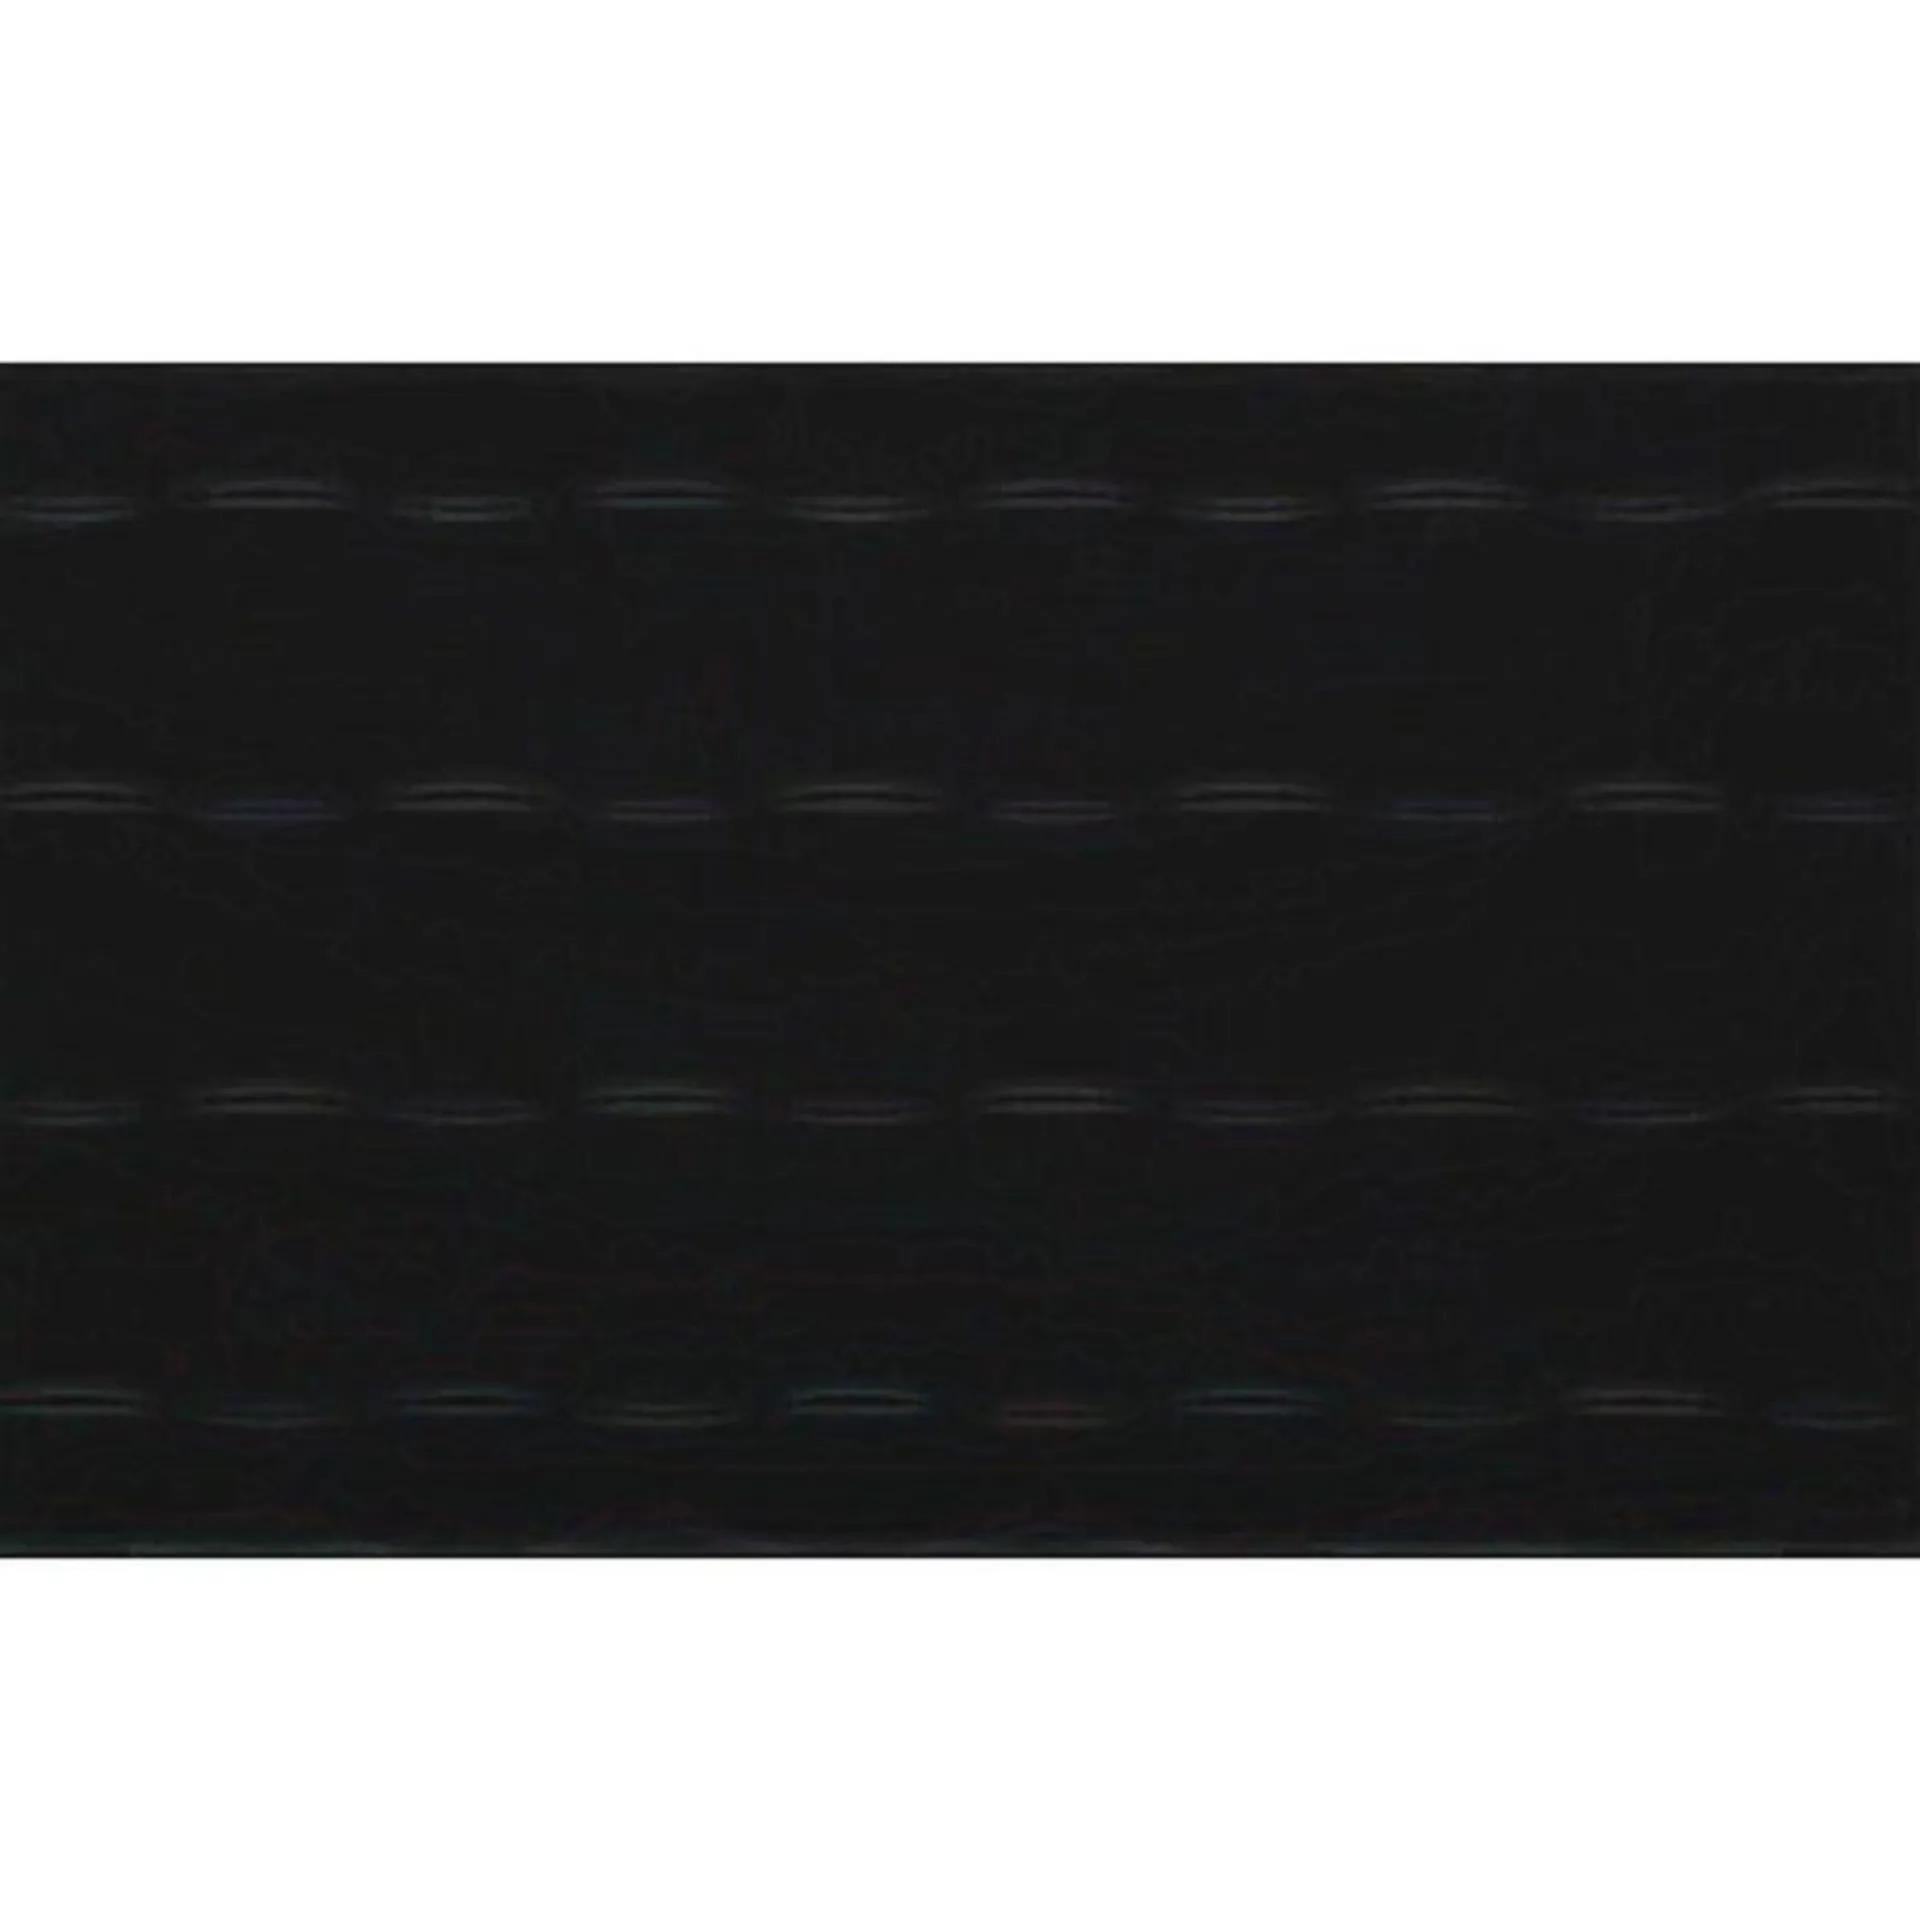 Cerámica Muro Frost Waves Black Brillante 25x40 cm